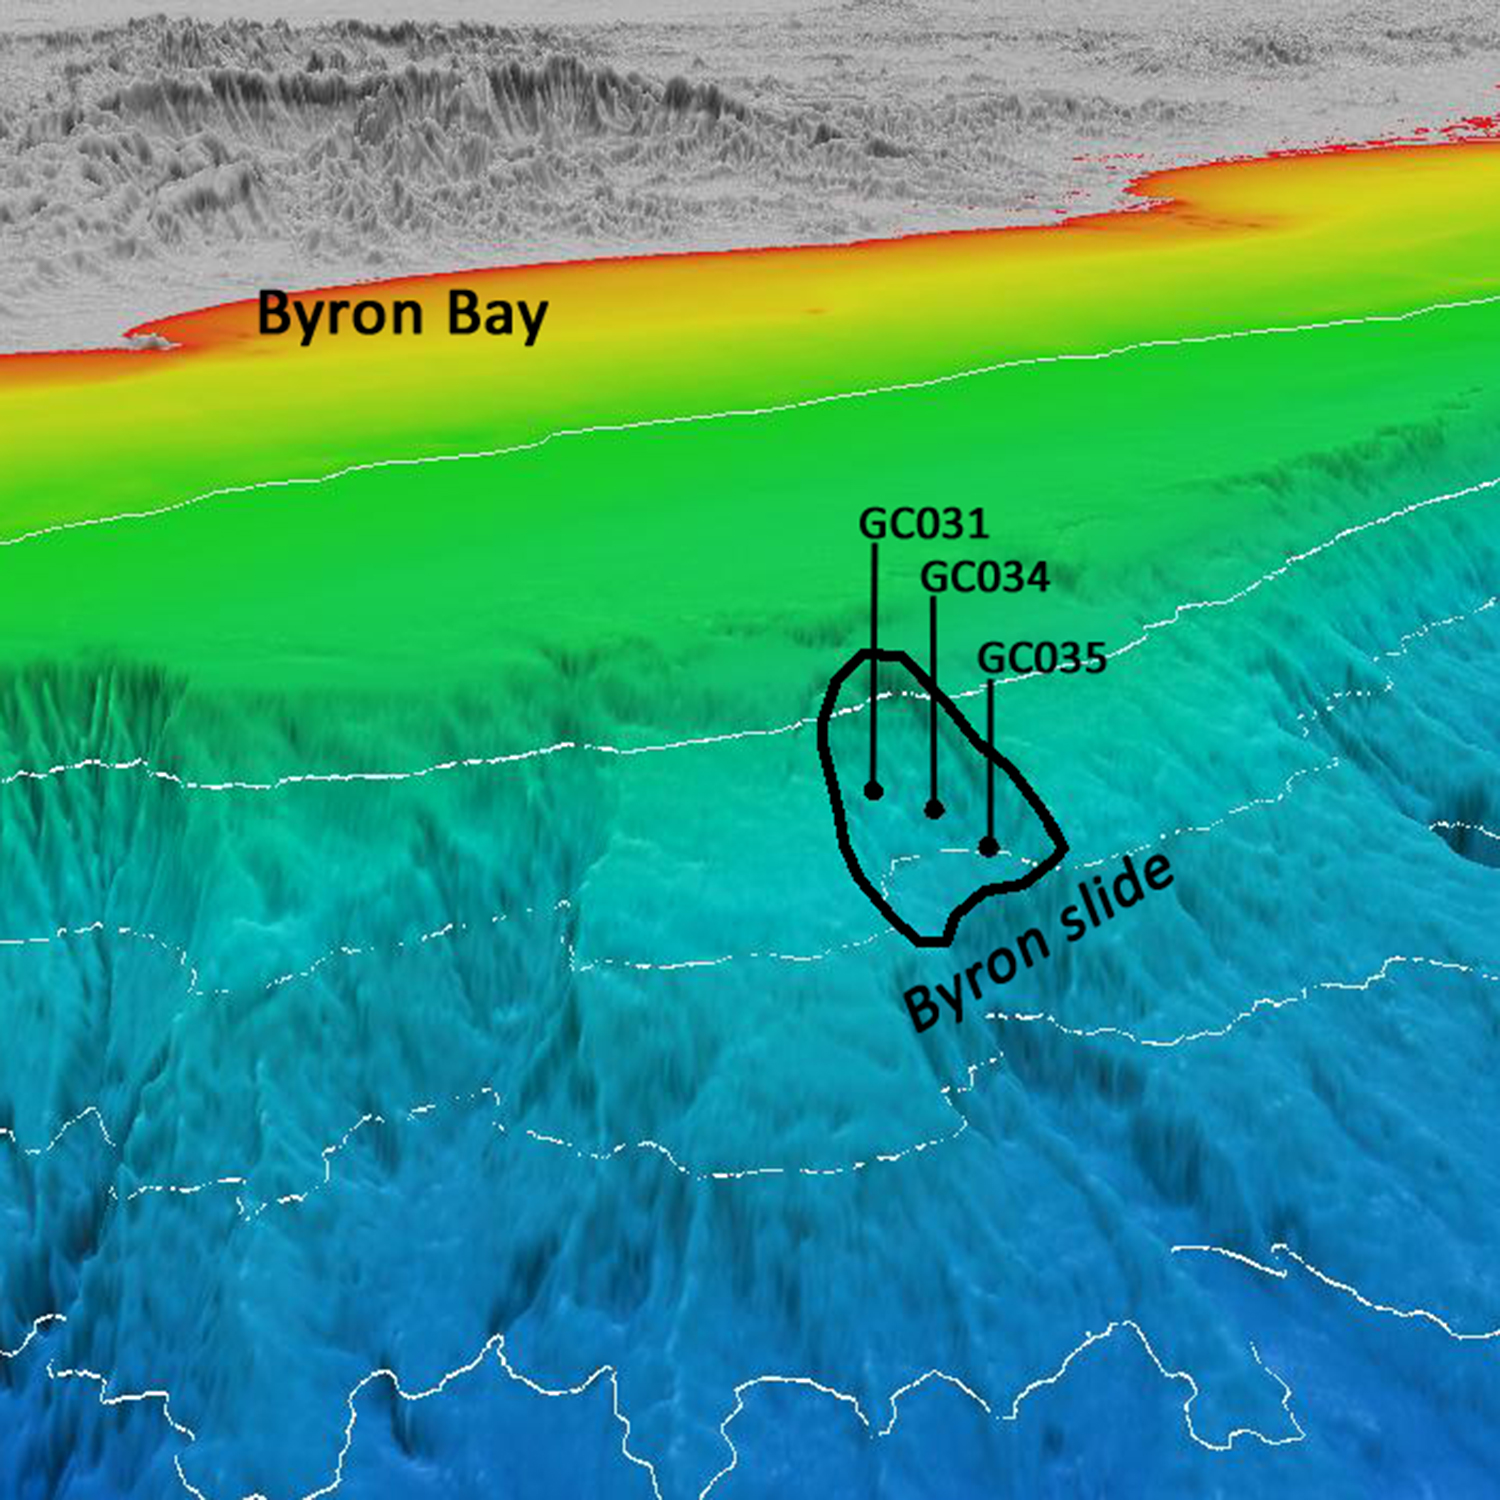 Byron submarine landslide scar offshore of Byron Bay